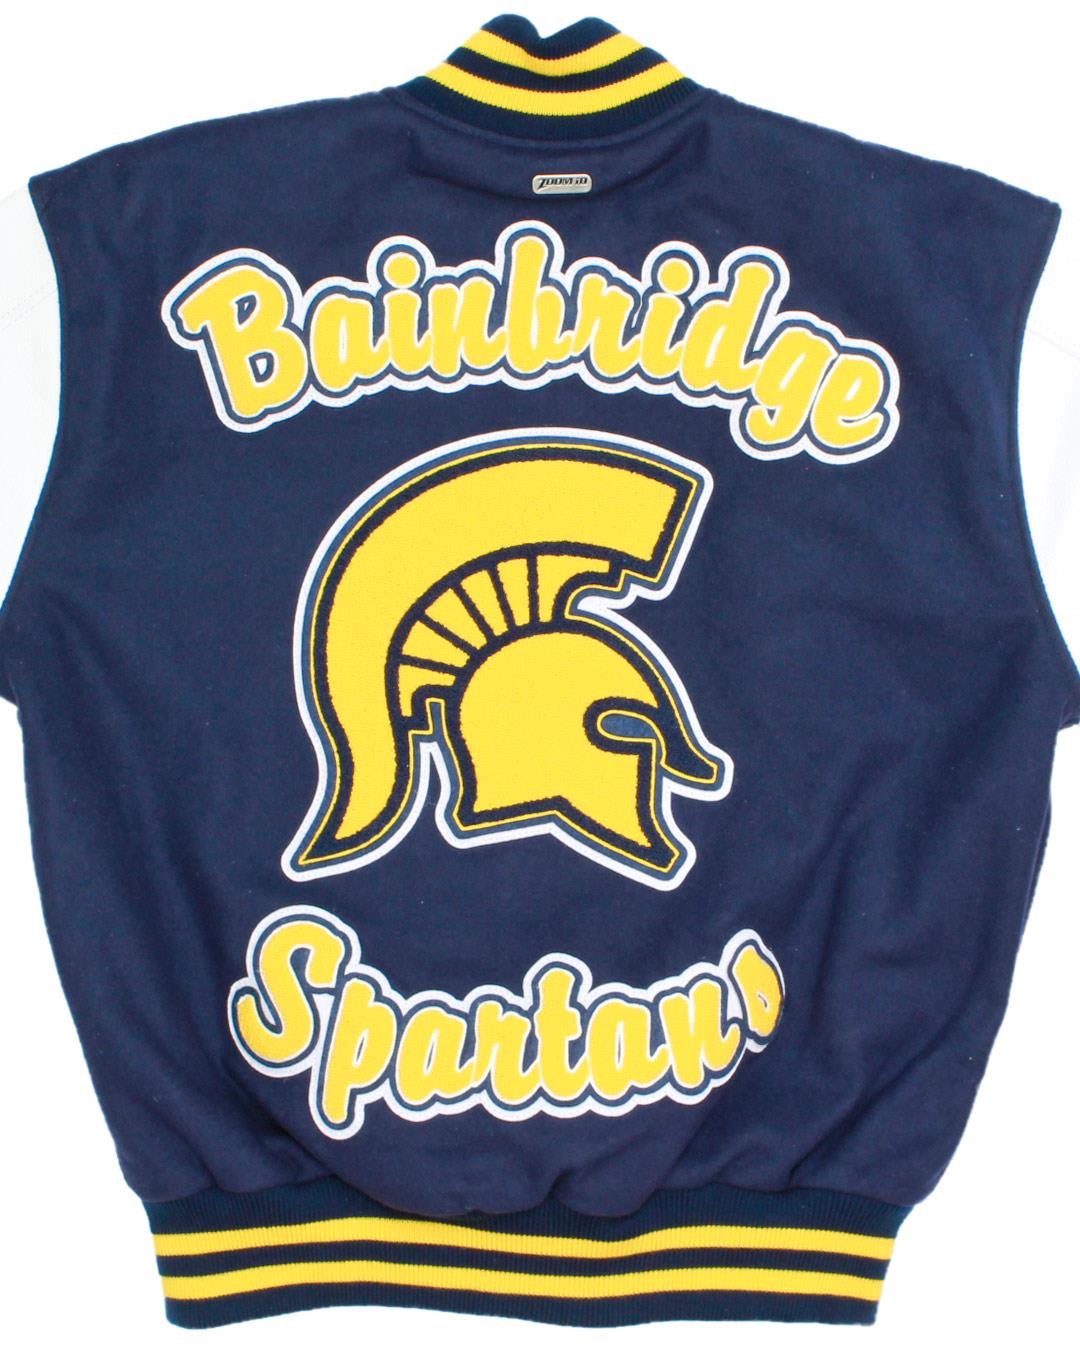 Bainbridge High School Spartans Lettermen Jacket, Bainbridge Island, WA - Back